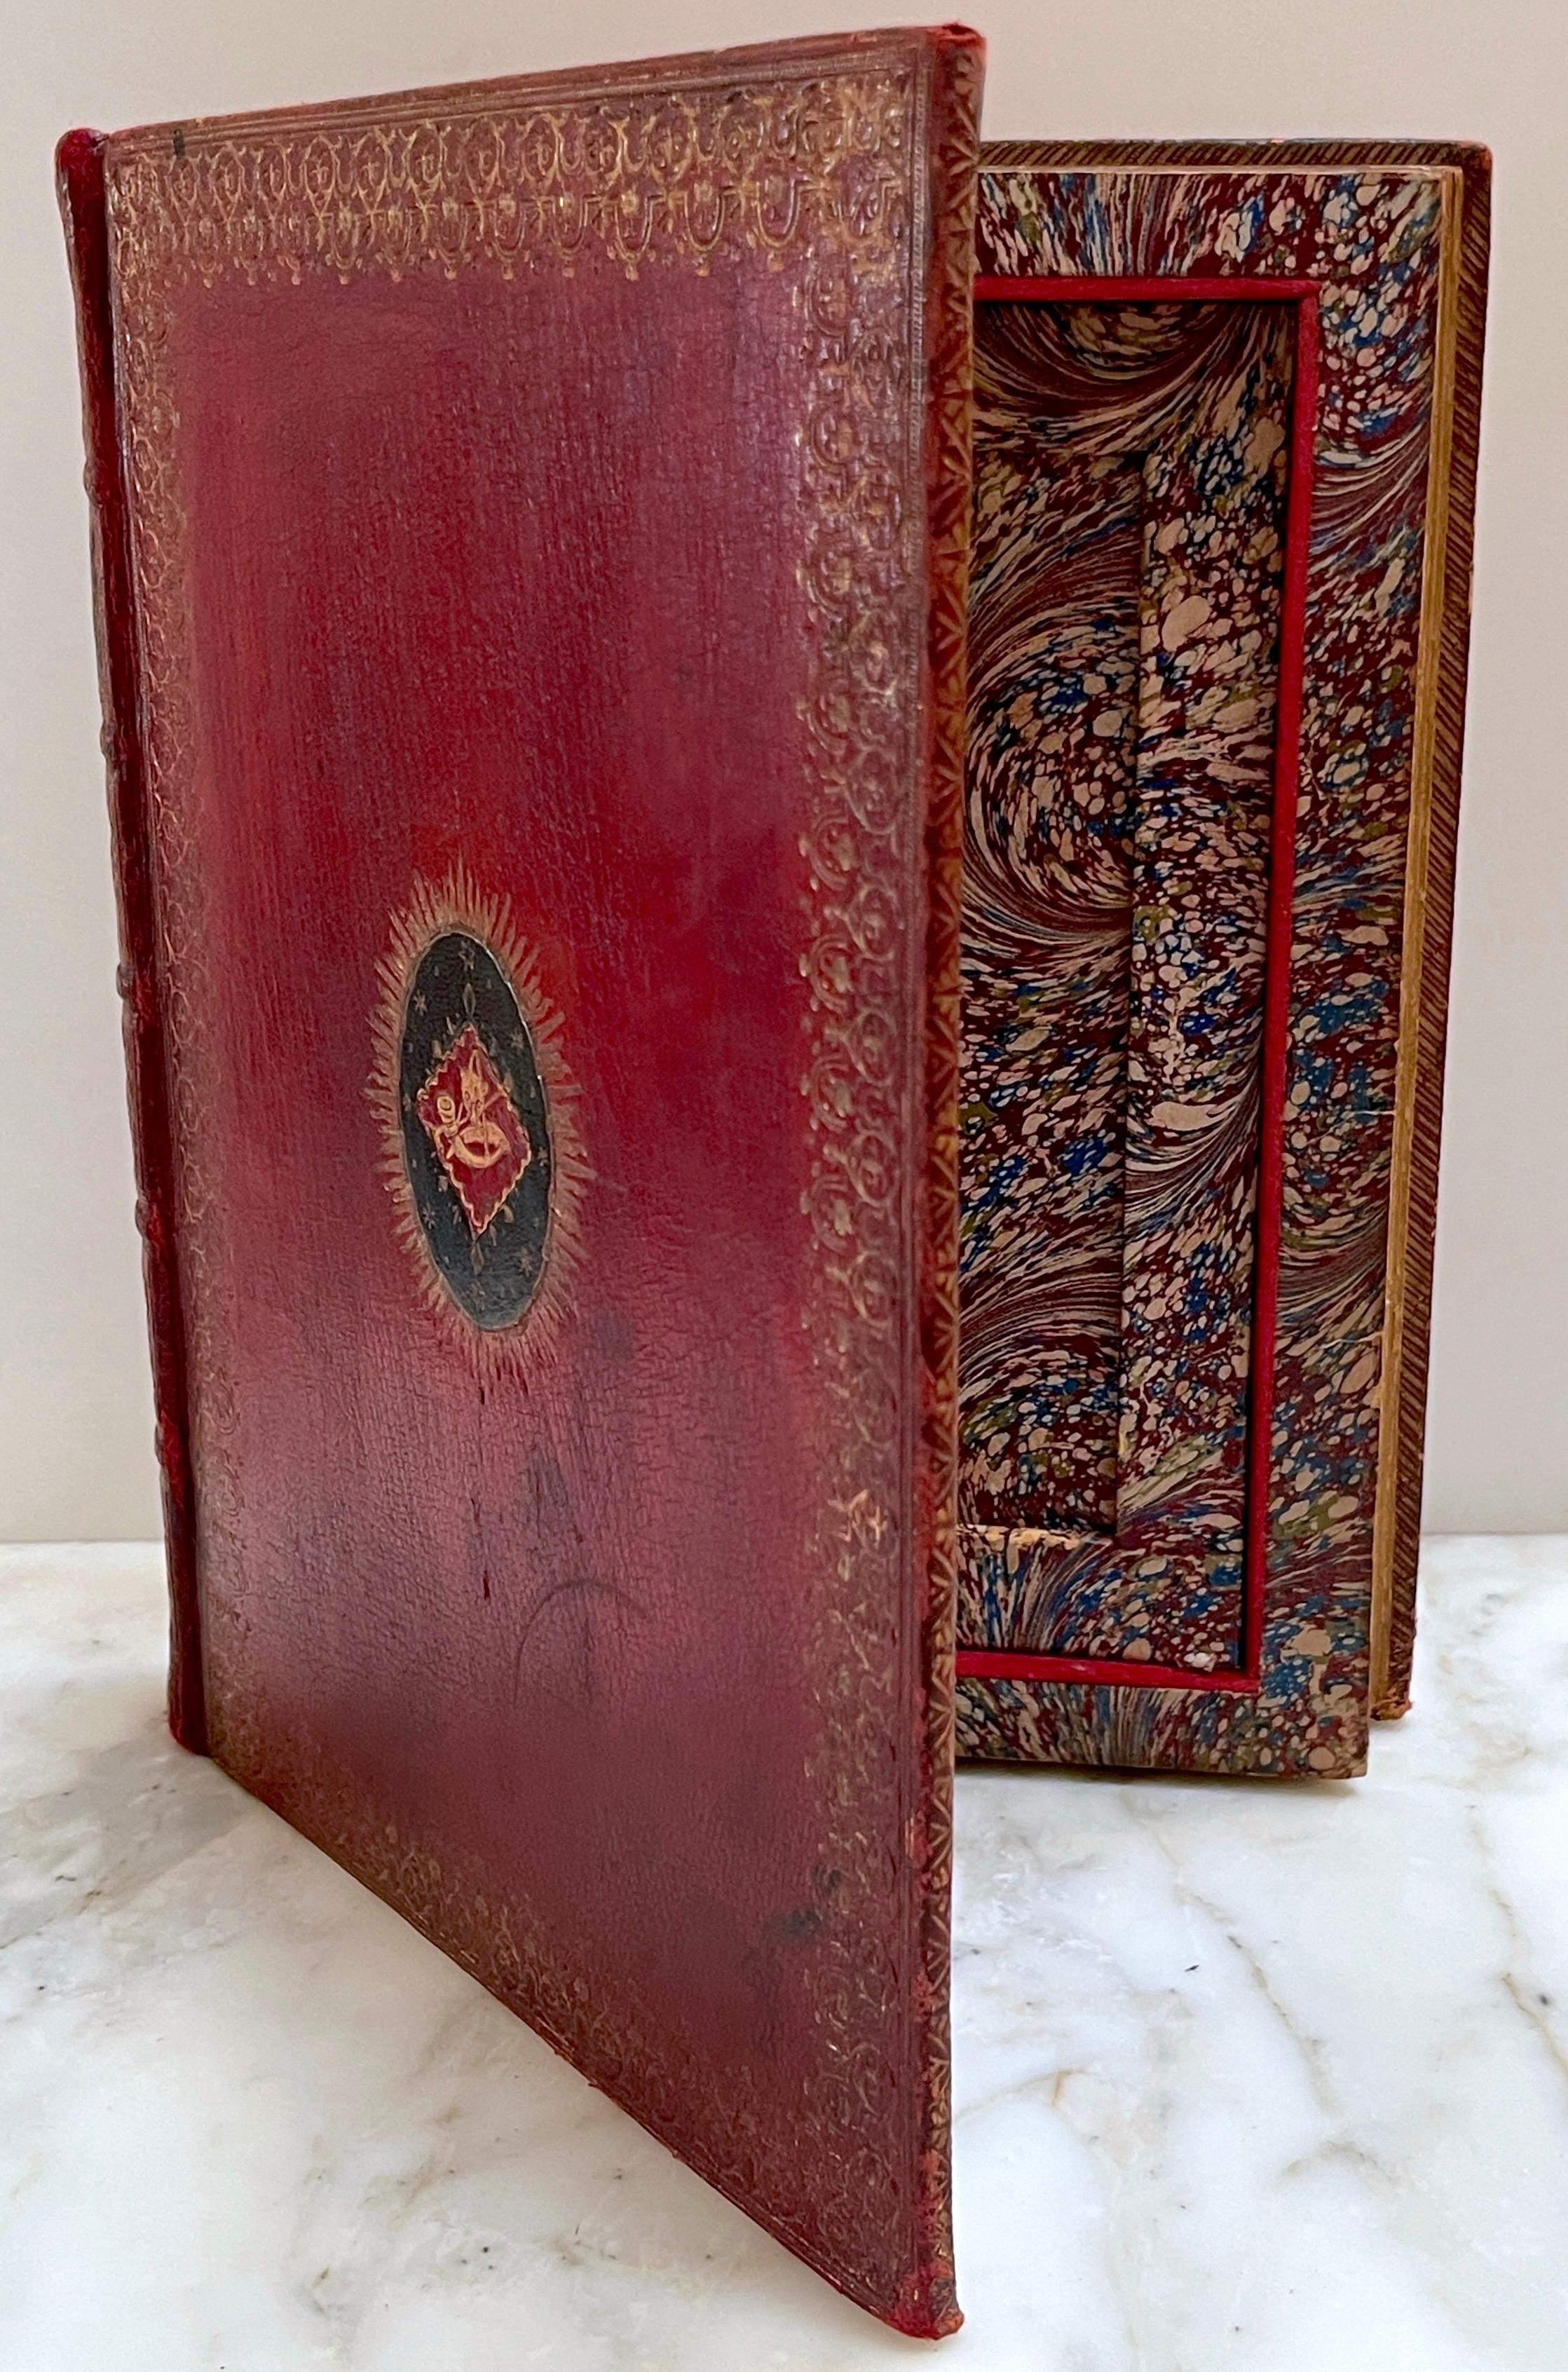 19. Jh. Rotes geprägtes Leder gebunden ( Faux / Dummy) Buch Box 'Hunt Buttons' 
England, um 1890

Diese in rotes geprägtes Leder gebundene Bücherkiste aus dem 19. Jahrhundert mit dem Titel 